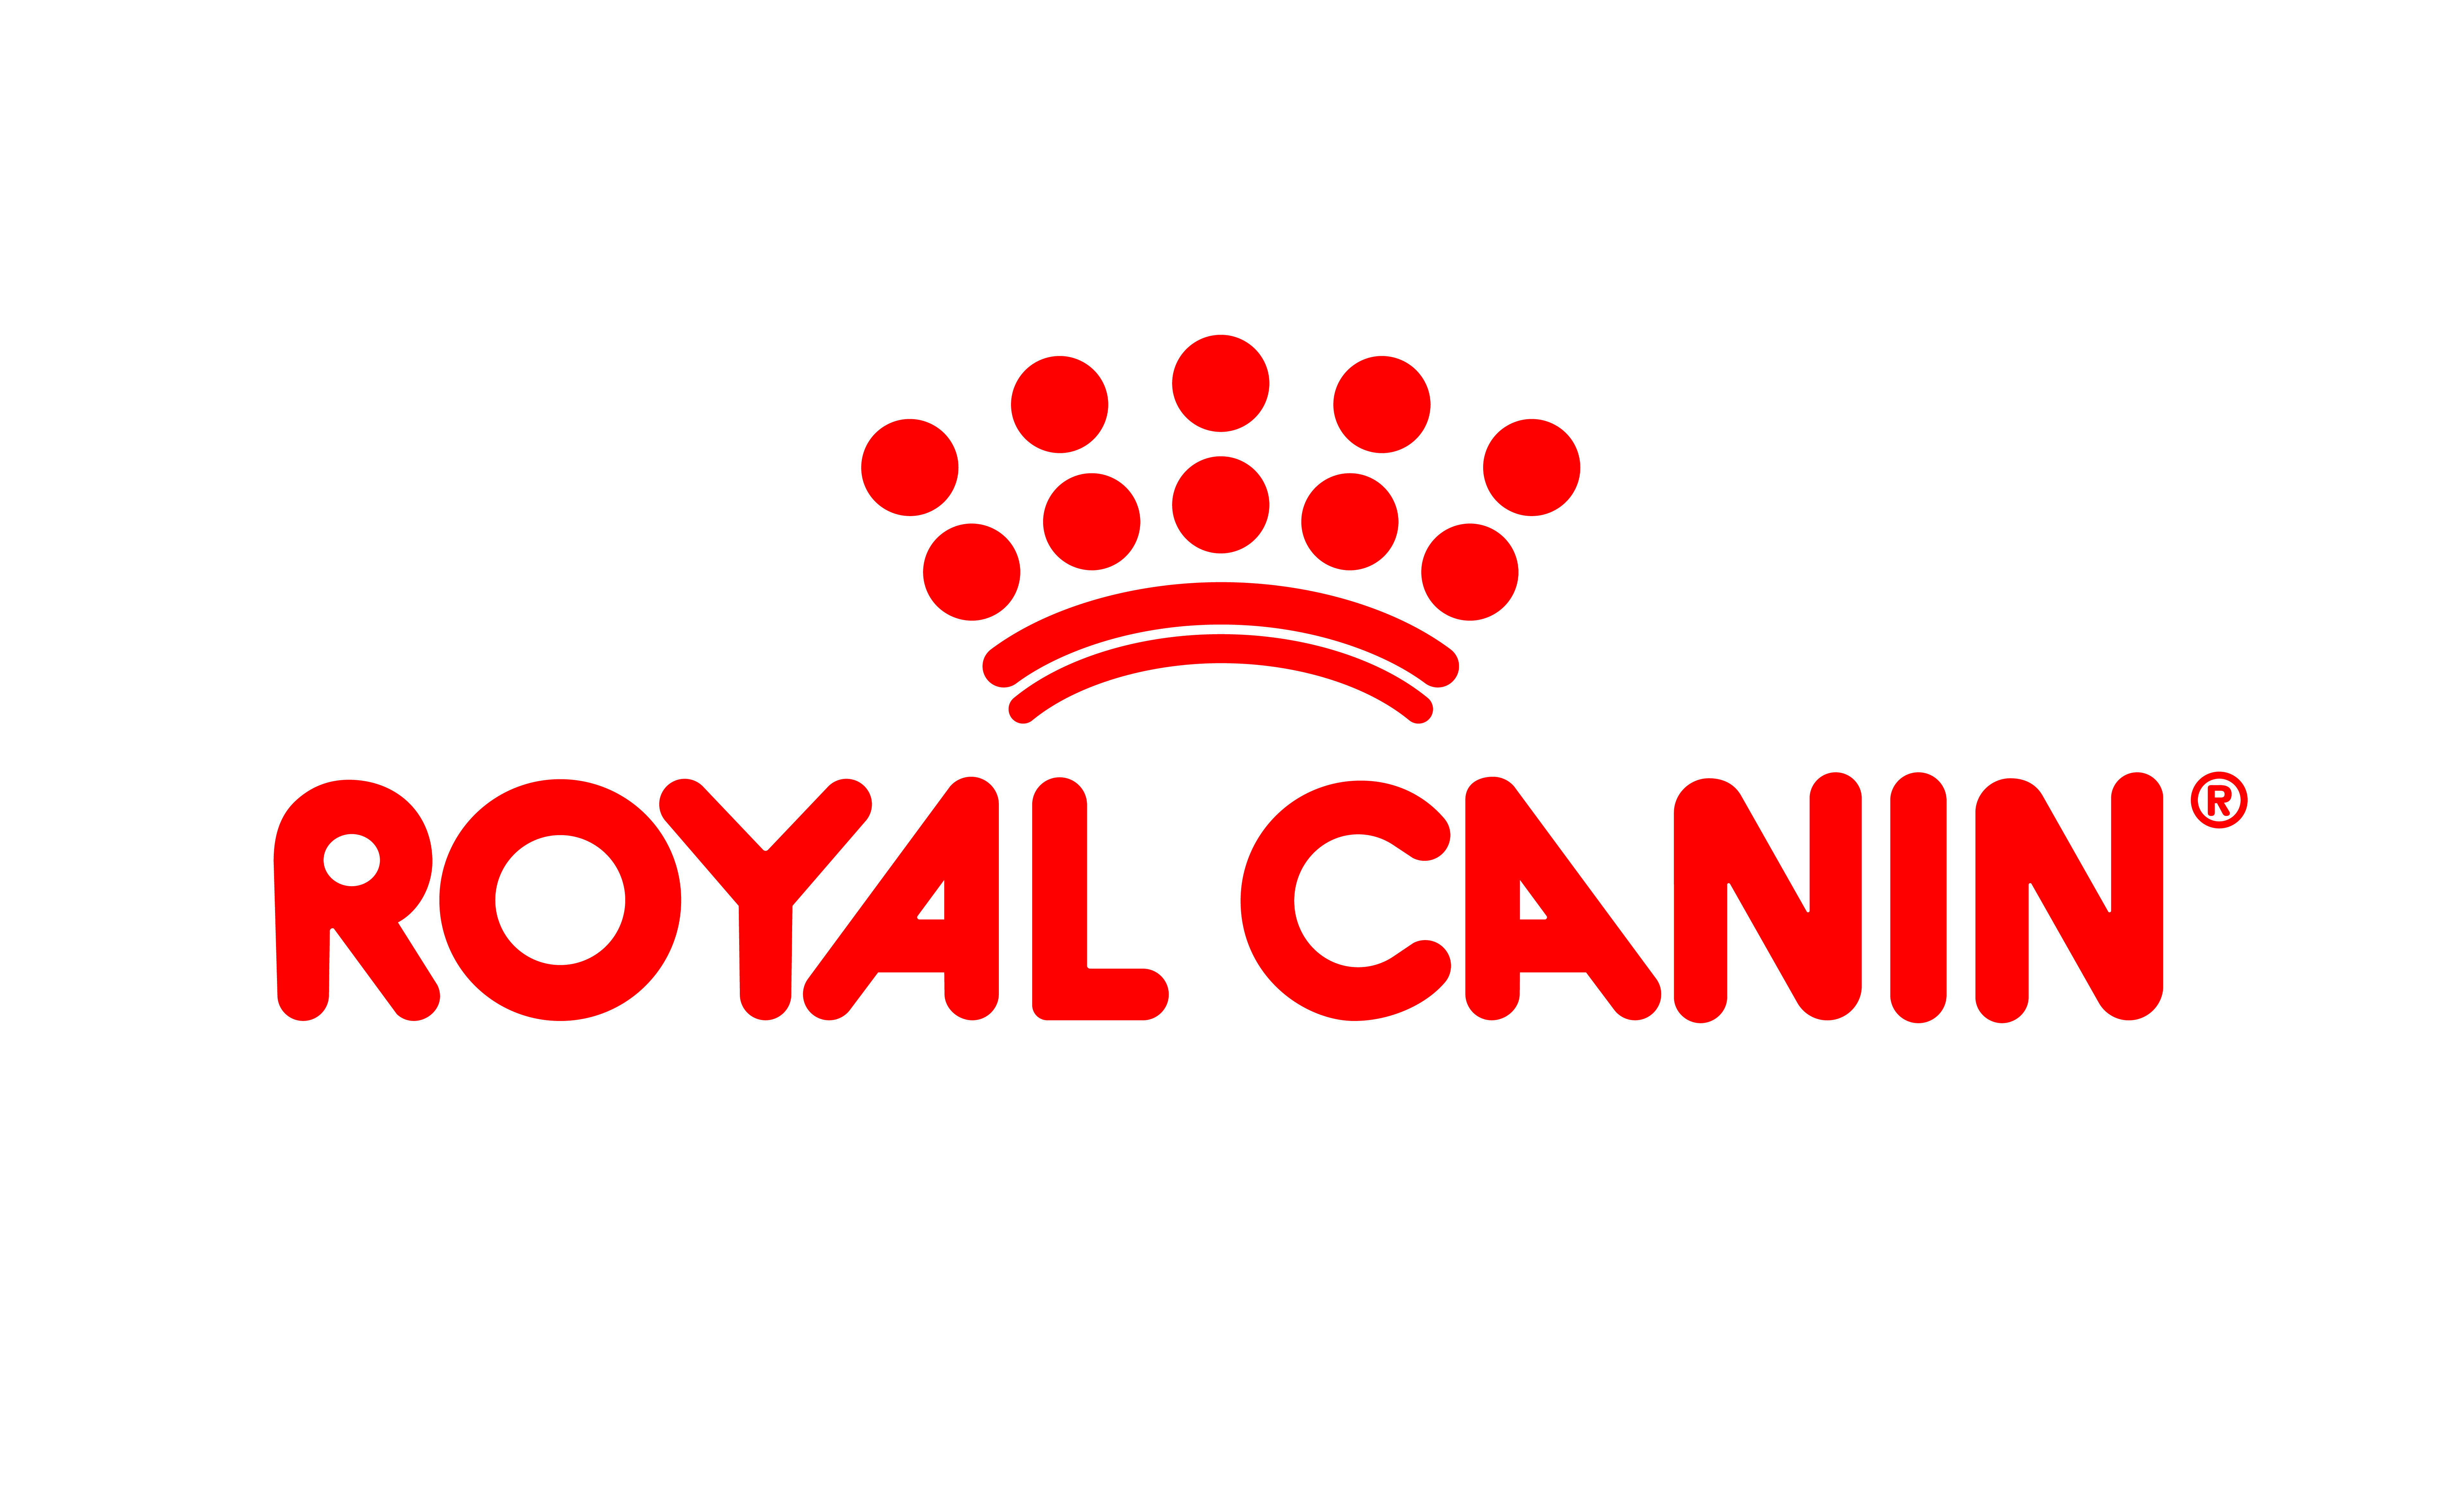 Royal canine